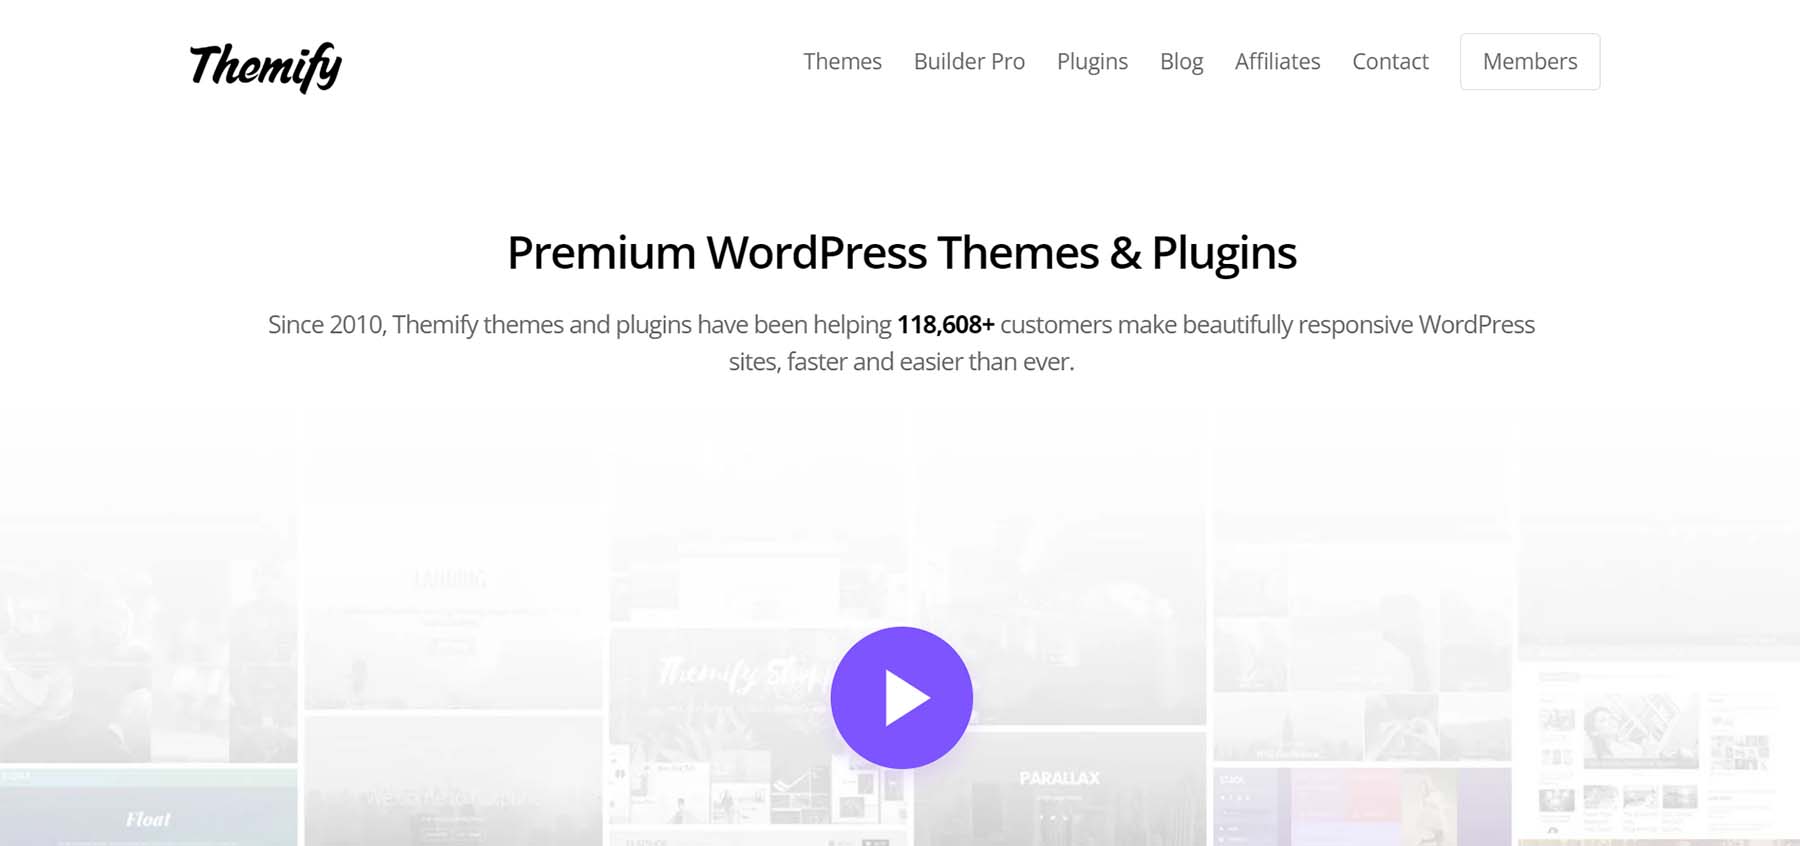 Themify Premium WordPress-Theme und Plugins